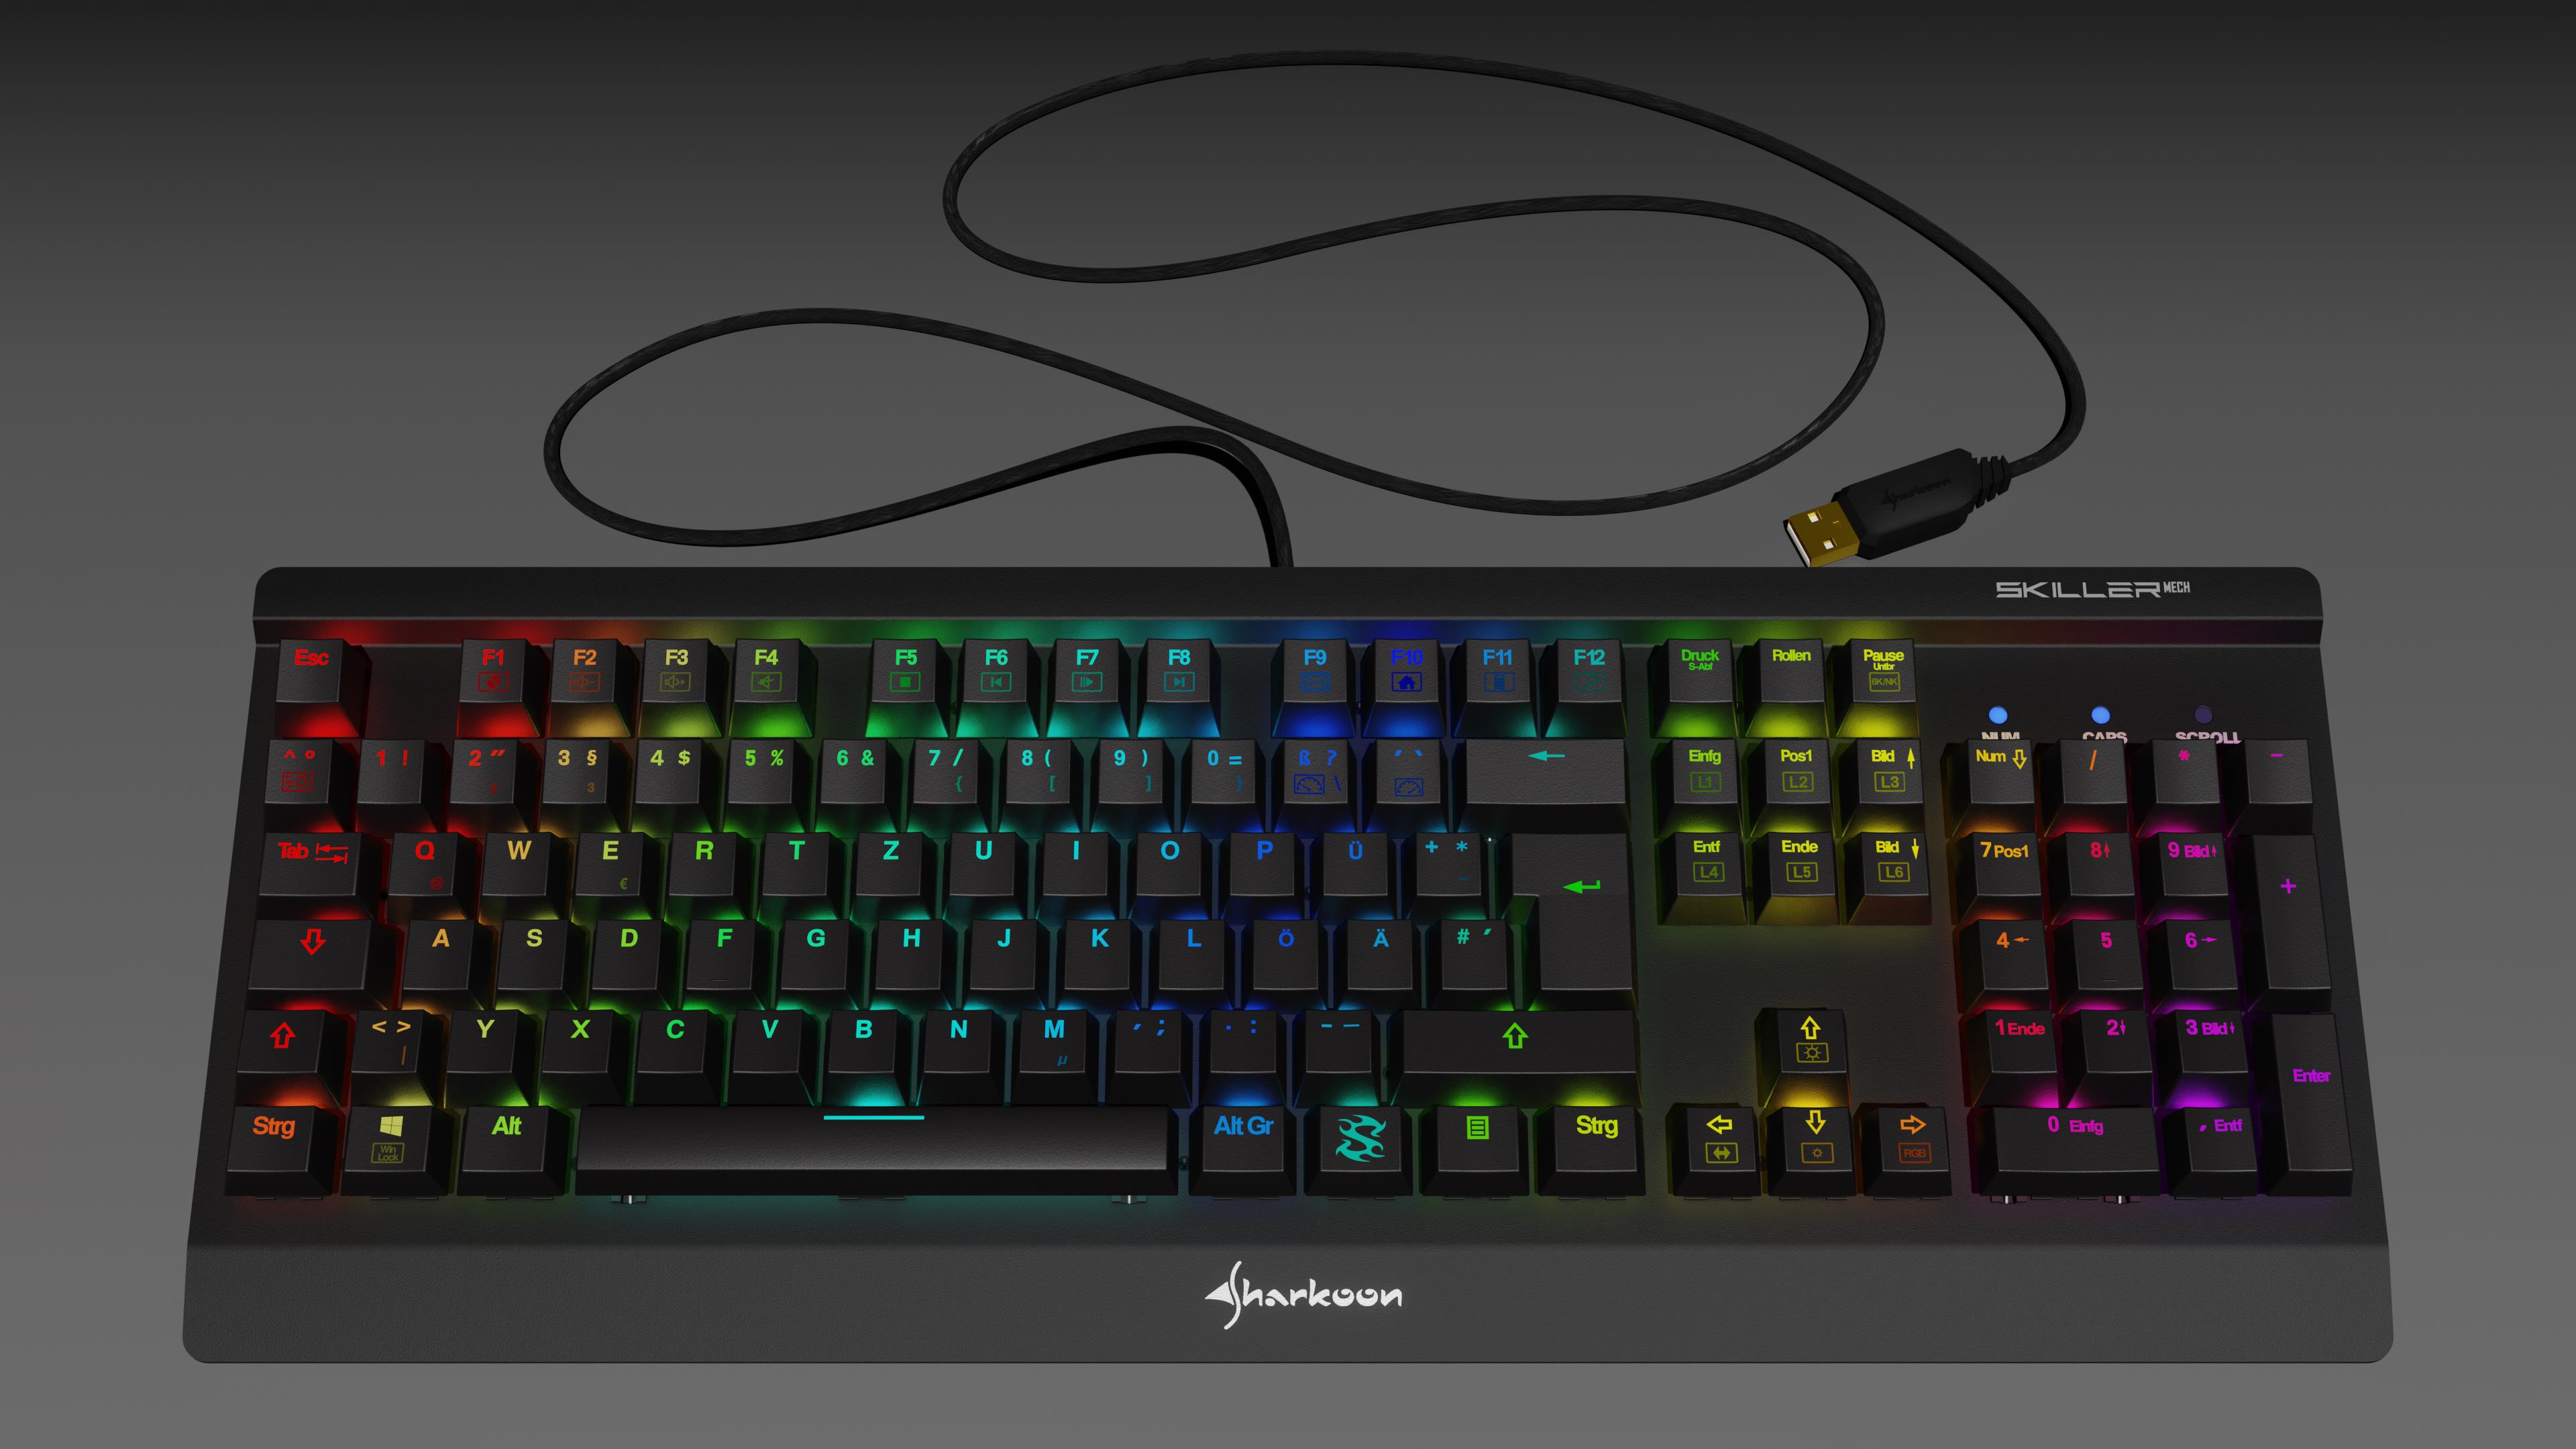 Sharkoon Skiller Mech Keyboard (illuminated) preview image 1